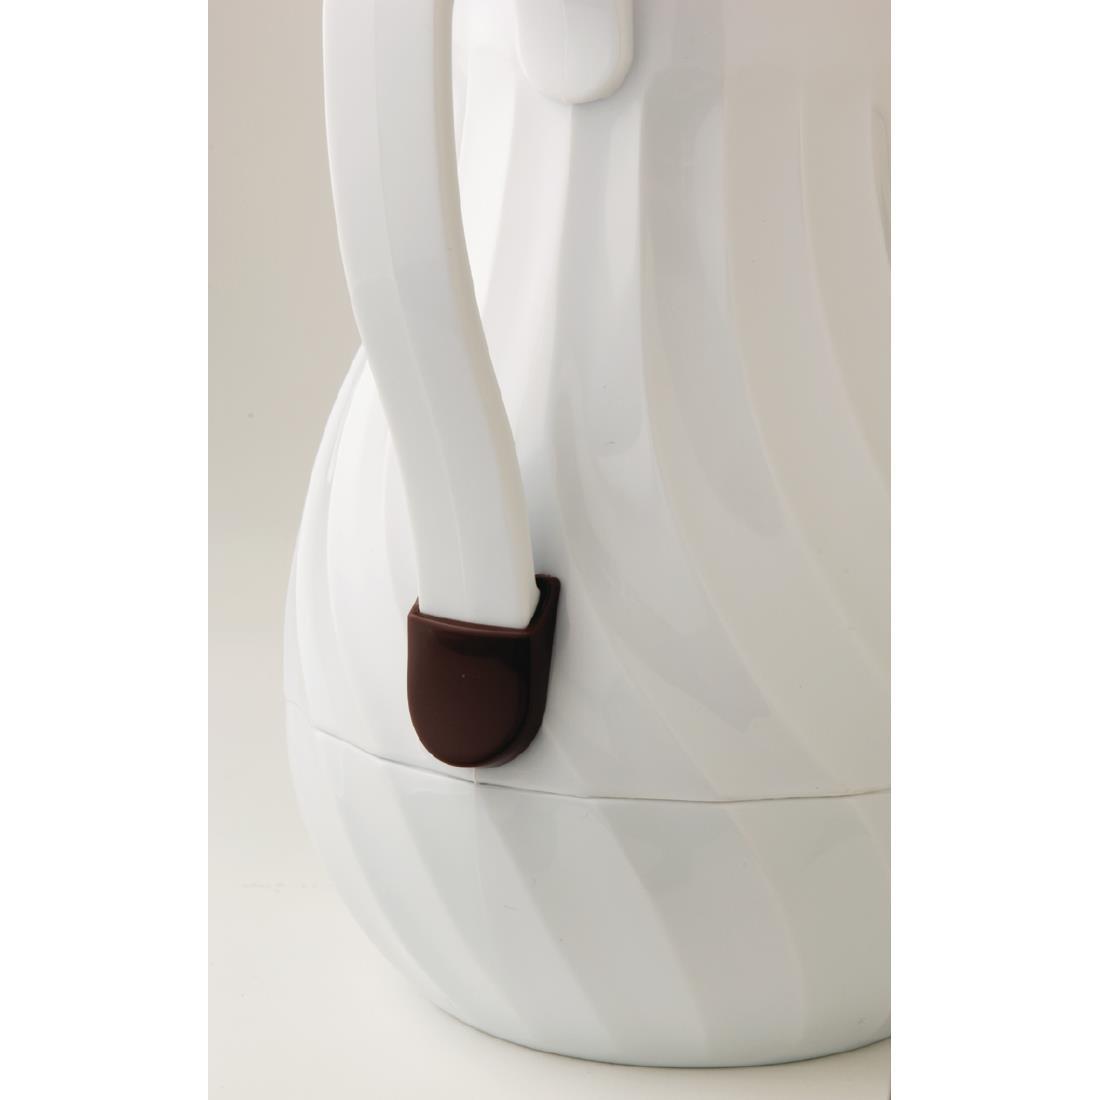 Kinox Insulated Coffee Jug White 1.1Ltr - K664  - 2